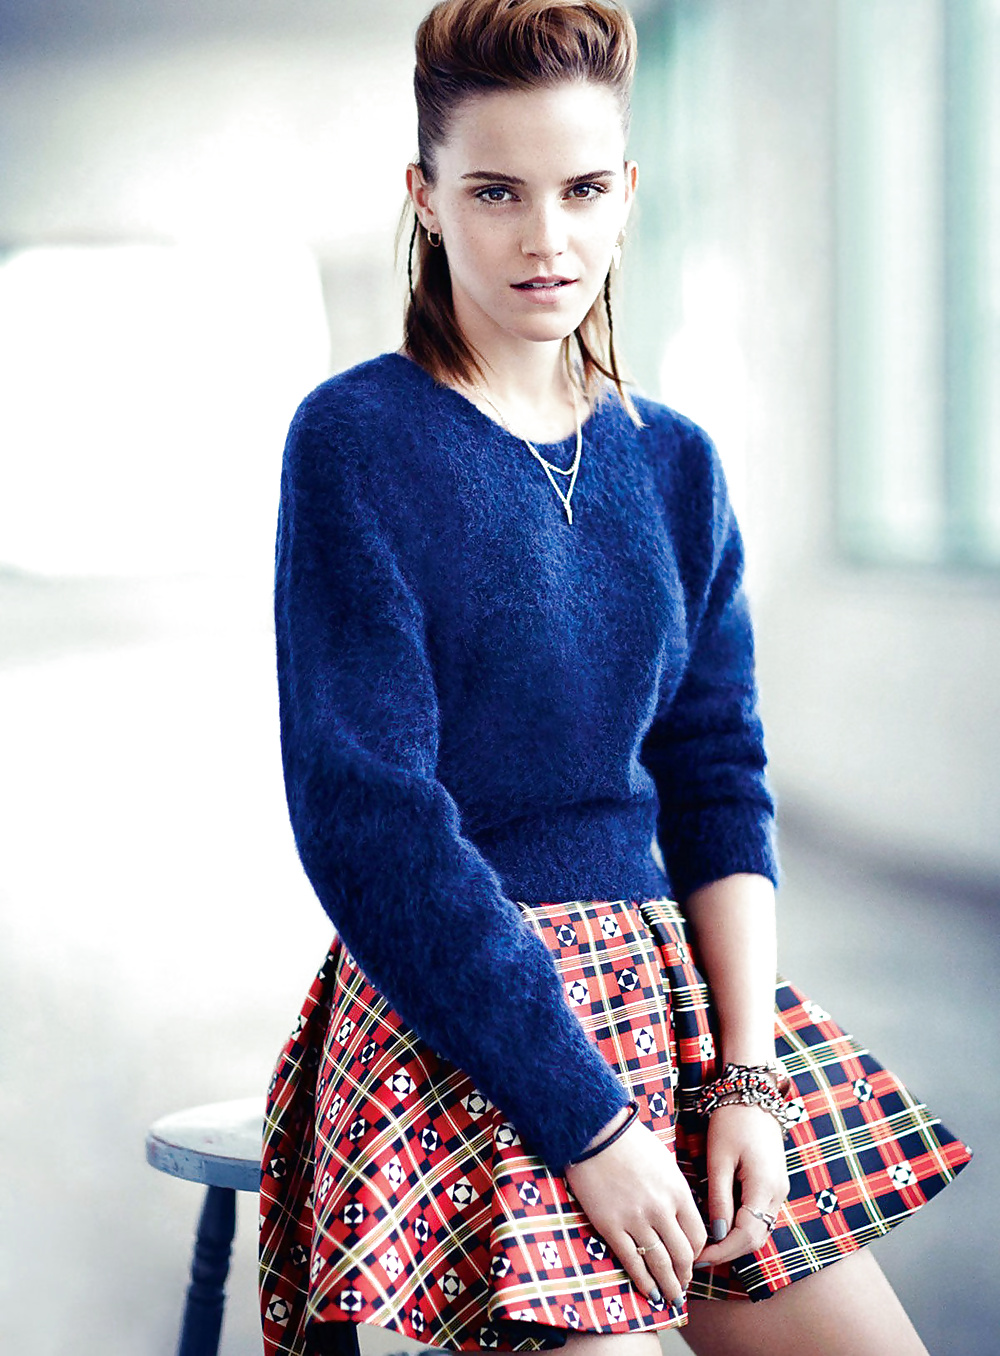 Emma Watson Freckles - Teen Vogue August 2013 #29434596